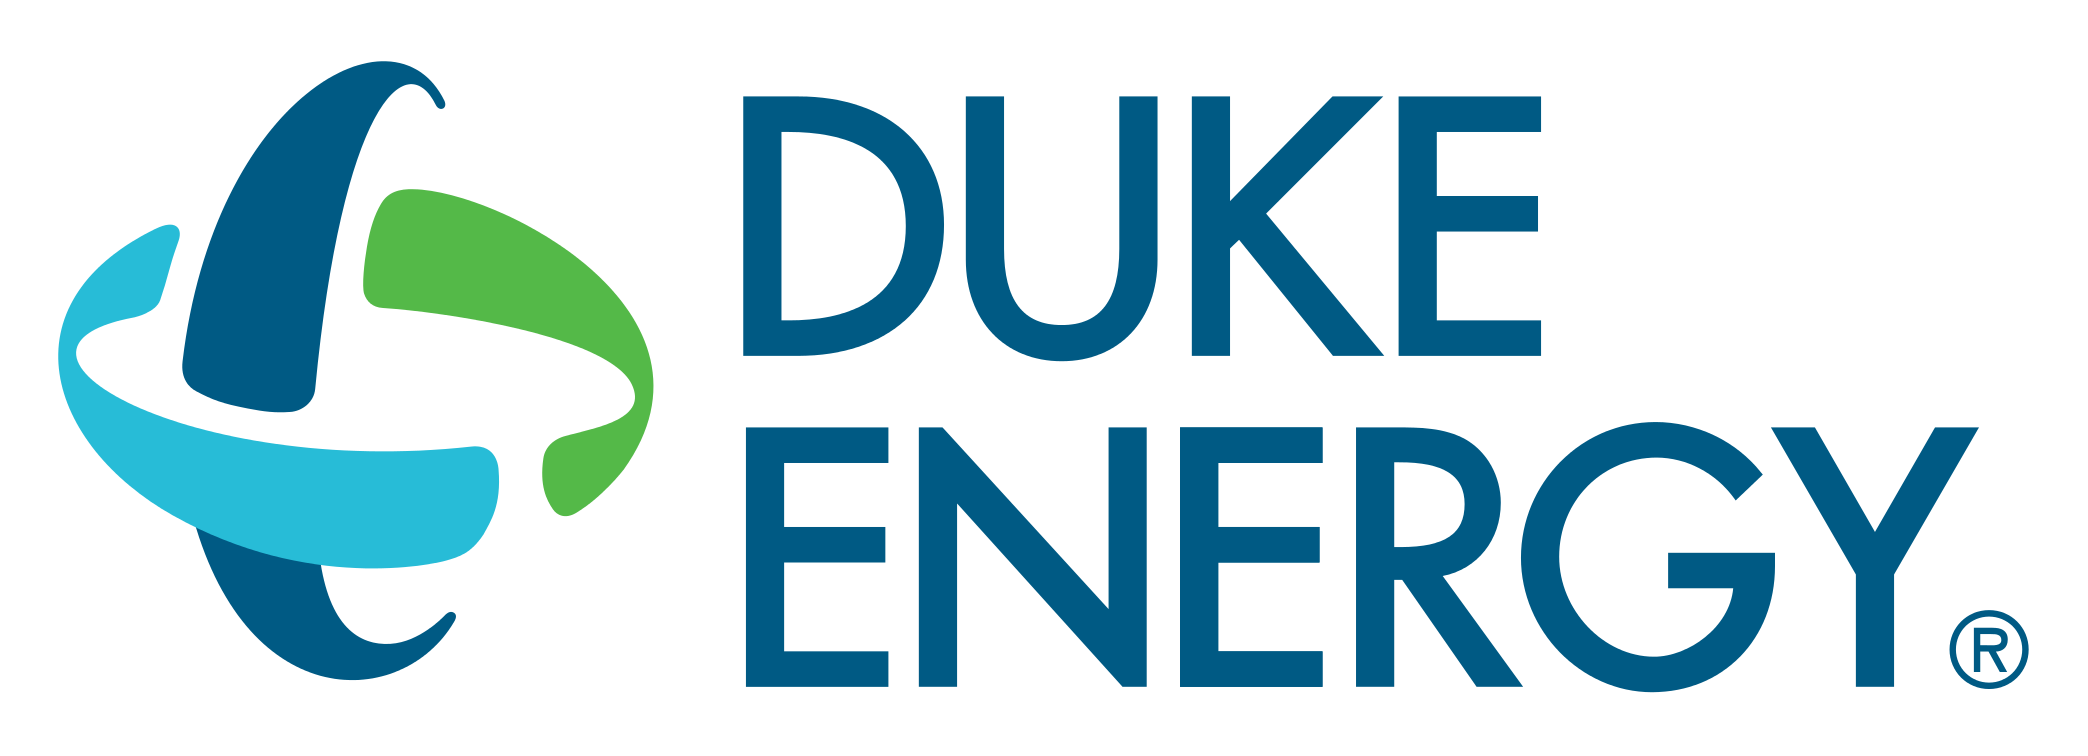 Energy clipart logo. Duke png image purepng